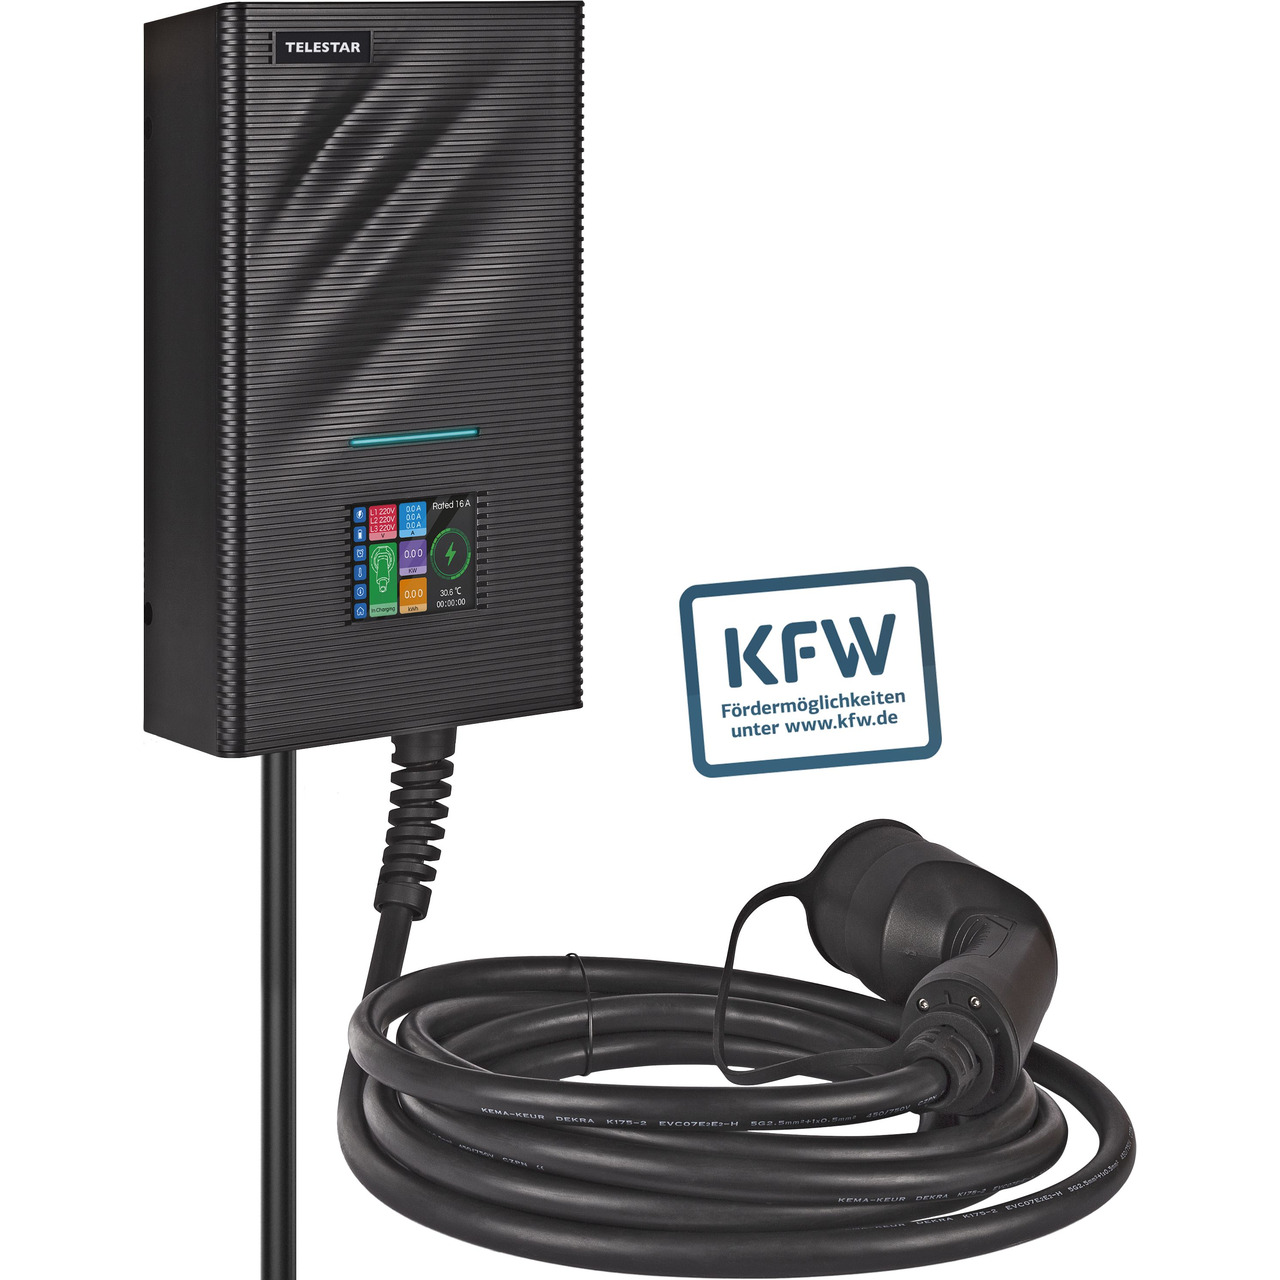 Telestar förderfähige Wallbox EC 311 S6- 11 kW-  6 m Ladekabel- App